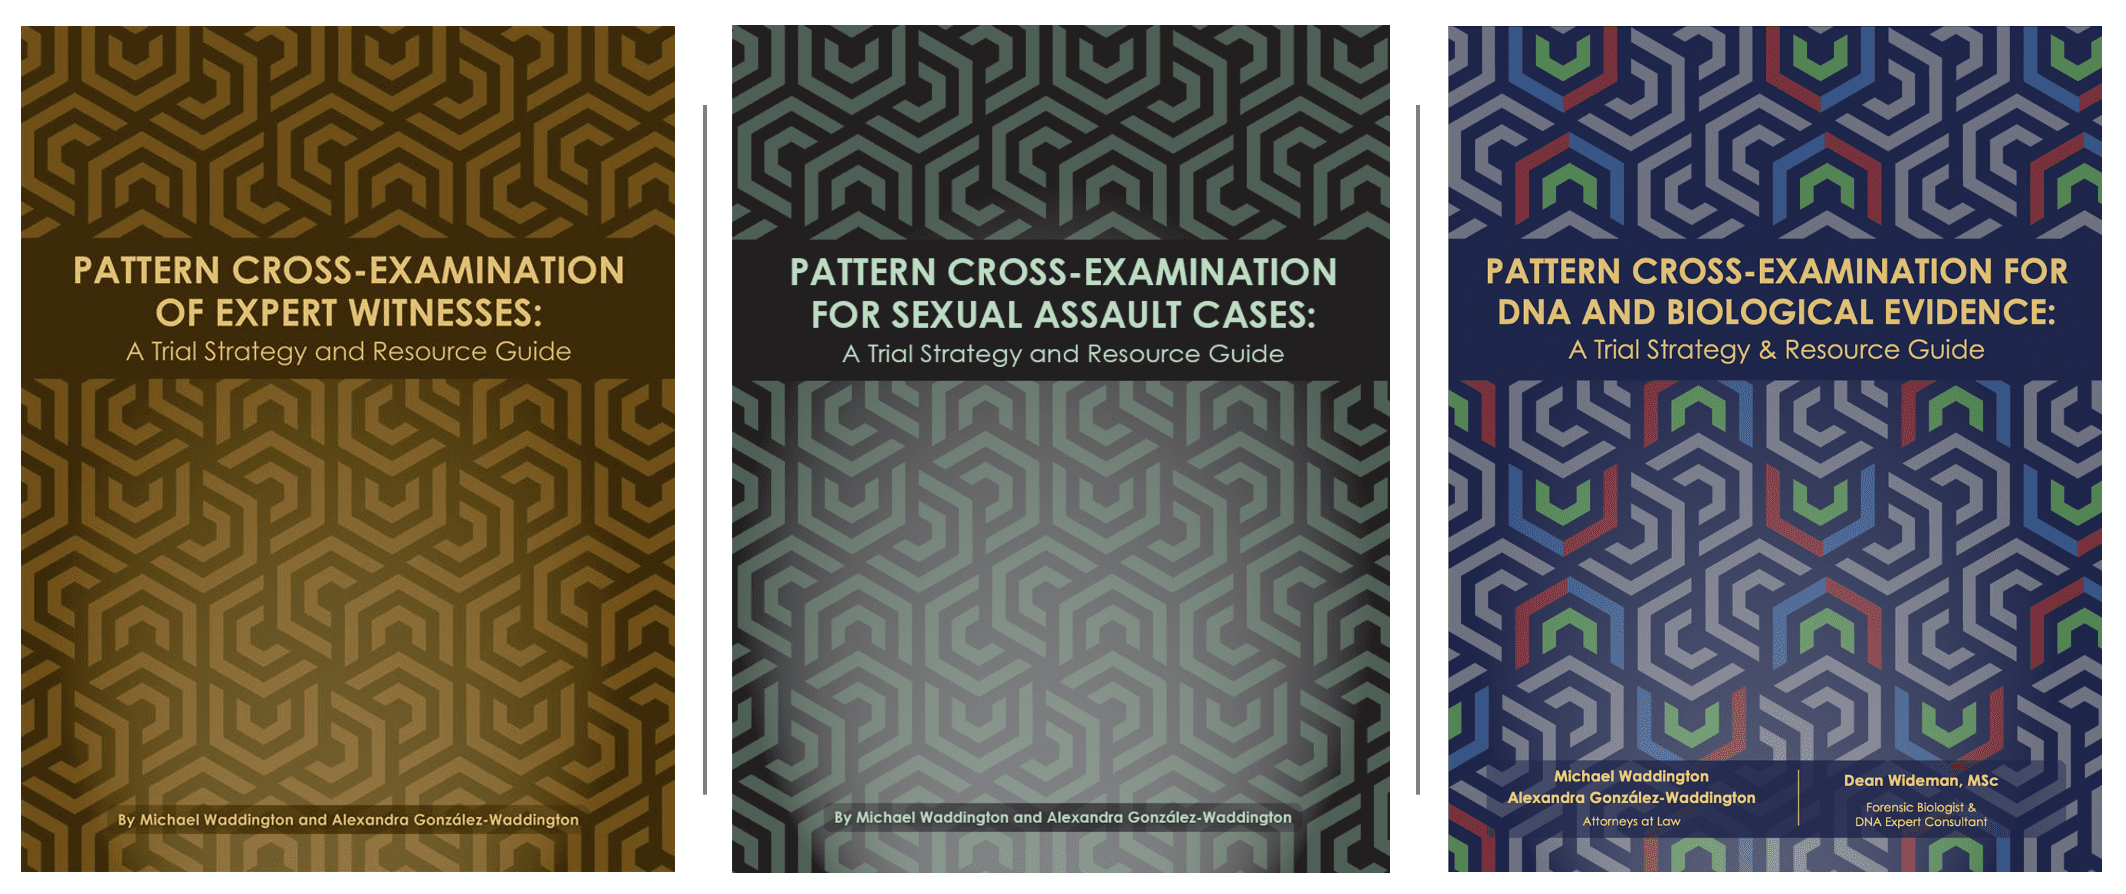 Three best-selling cross-examination books authored my Michael Waddington and Alexandra Gonzalez-Waddington.